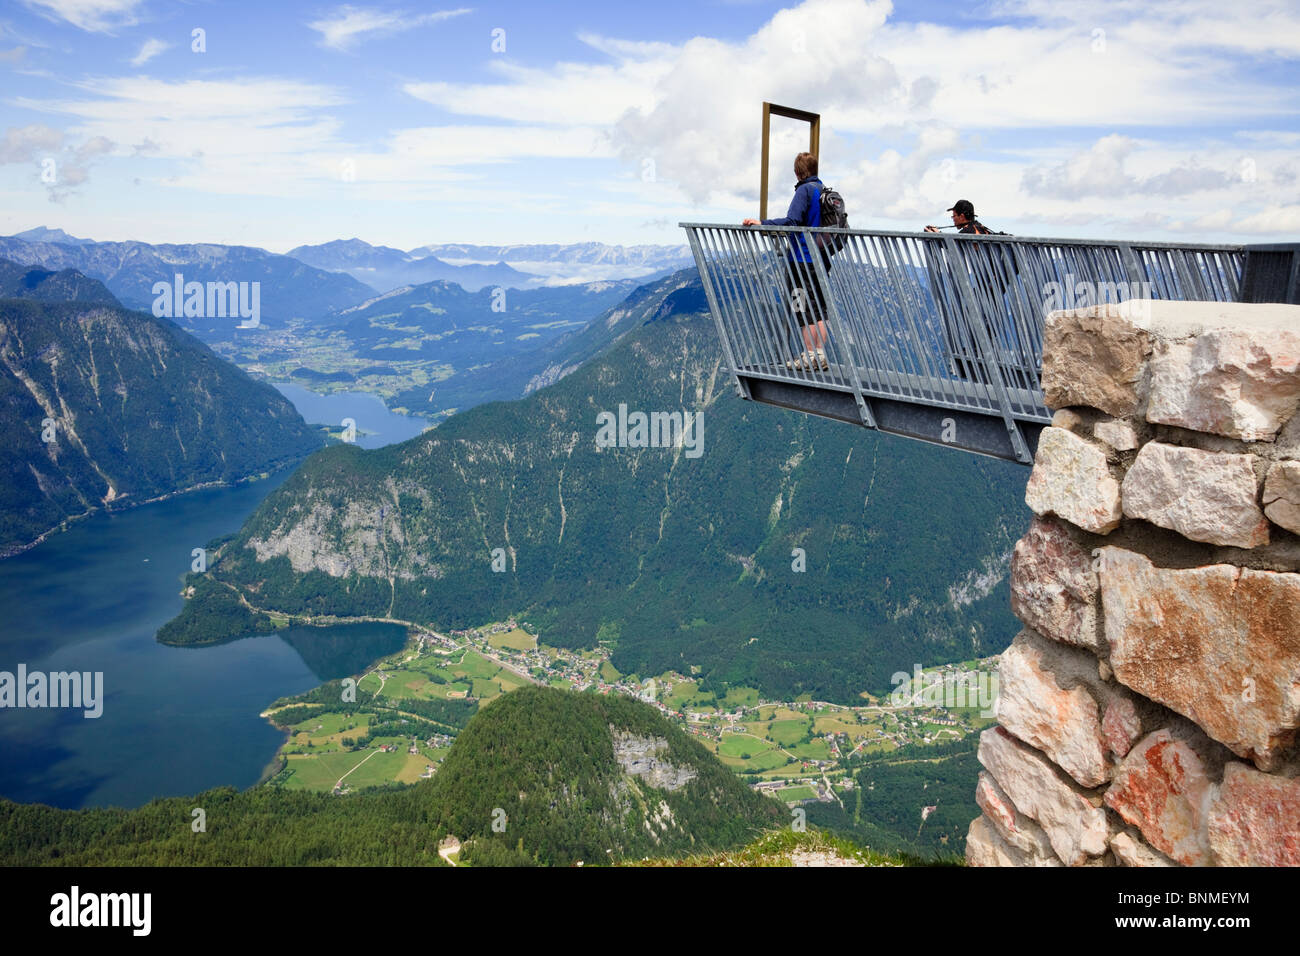 People on 5fingers viewing platform on Krippenstein mountain at Dachstein World Heritage site overlooking Hallstattersee lake in Austrian Alps Austria Stock Photo